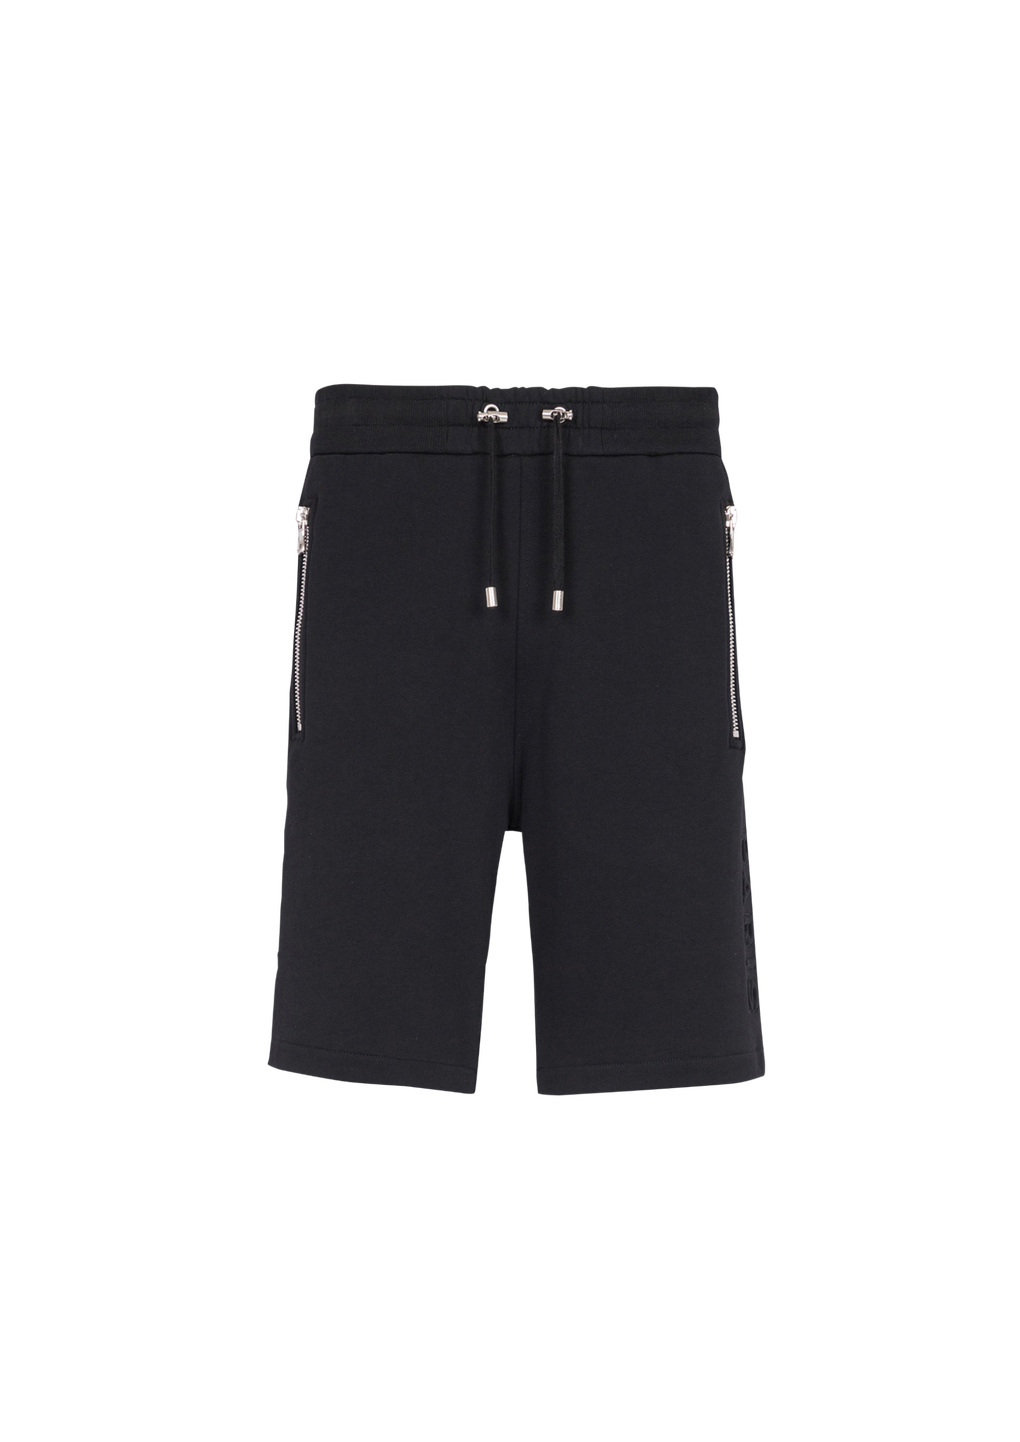 Cotton shorts with embossed Balmain logo, black, hi-res